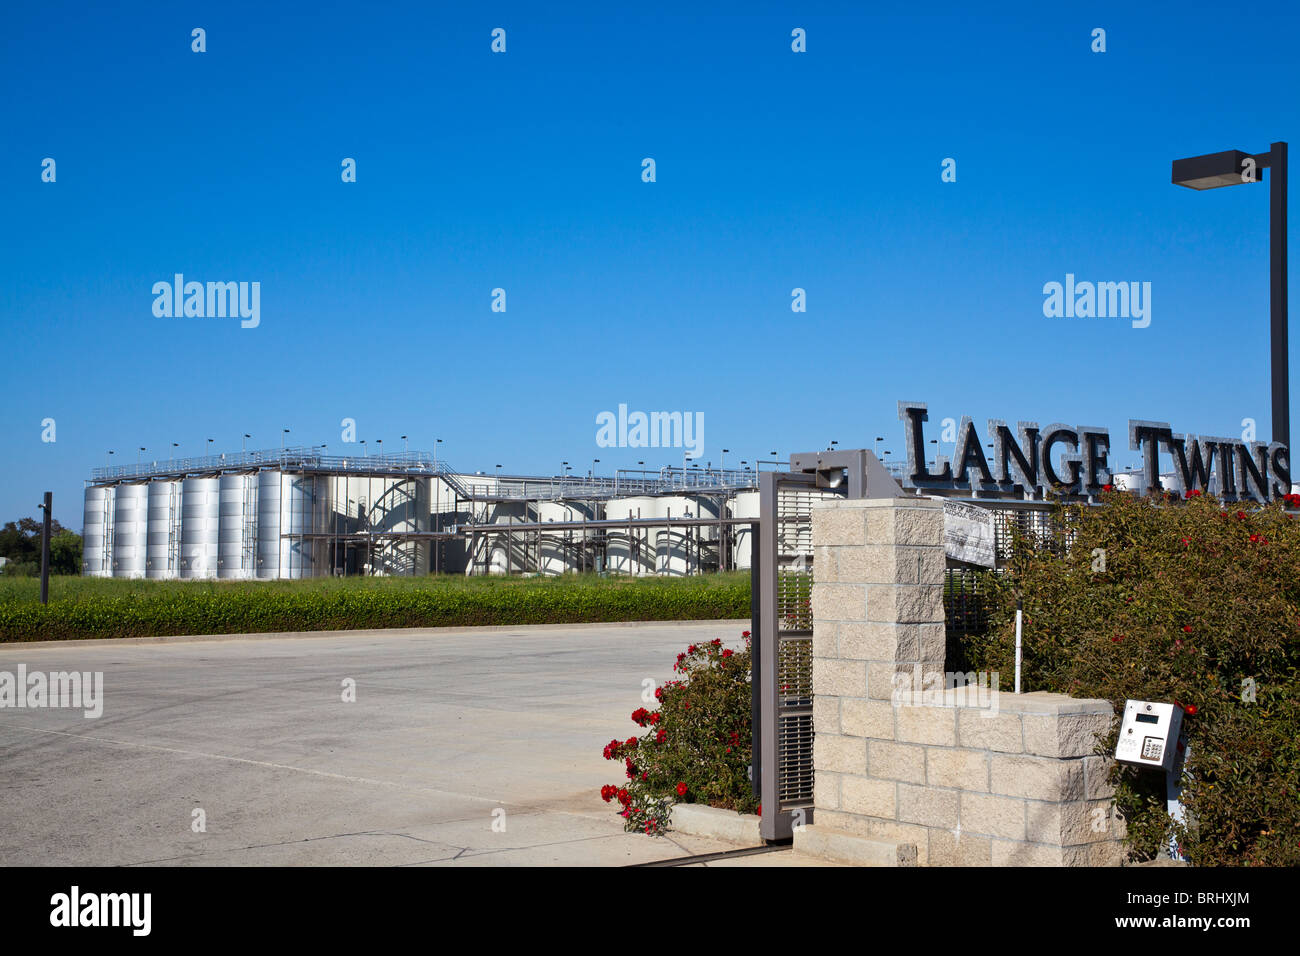 Wine tanks at the Lange twins winery in Lodi Califonia Stock Photo